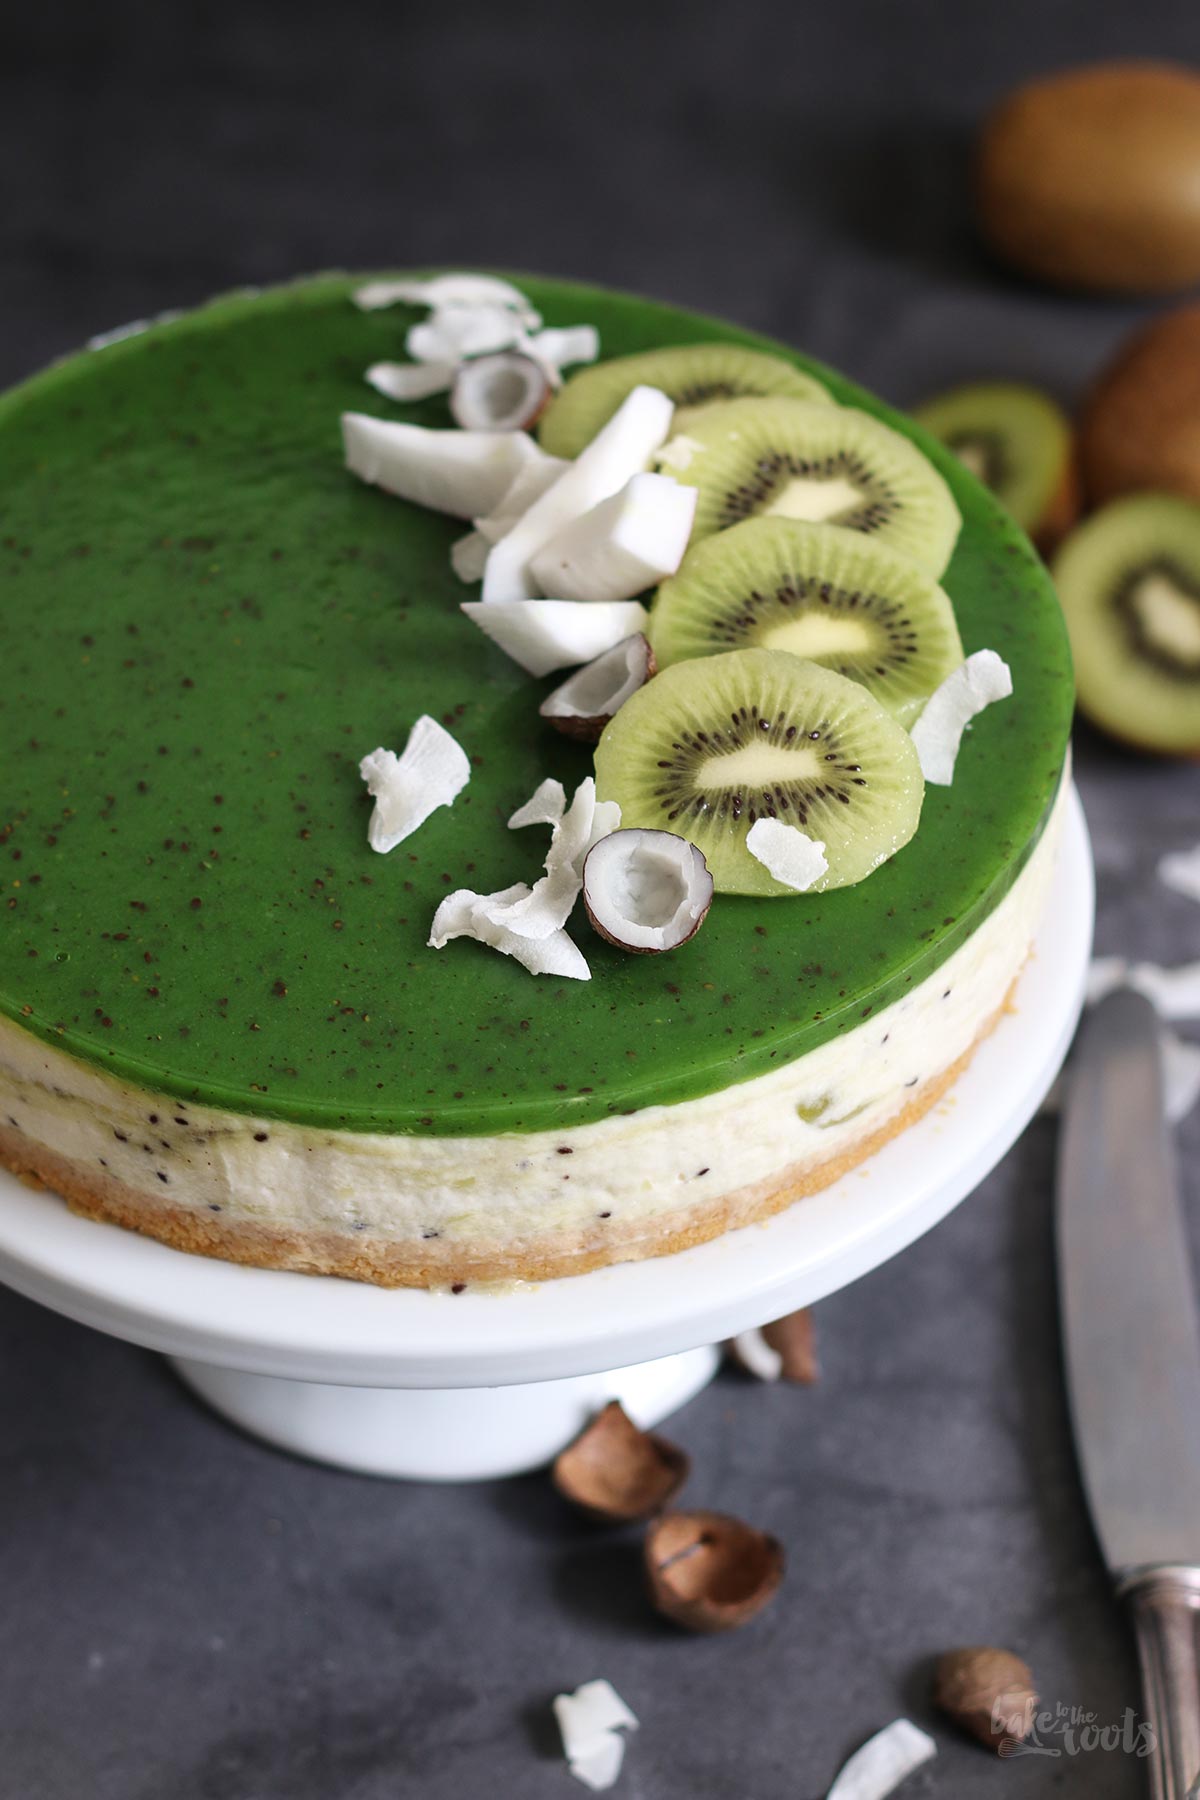 (Veganer) Kiwi Kokosnuss No-Bake Cheesecake | Bake to the roots